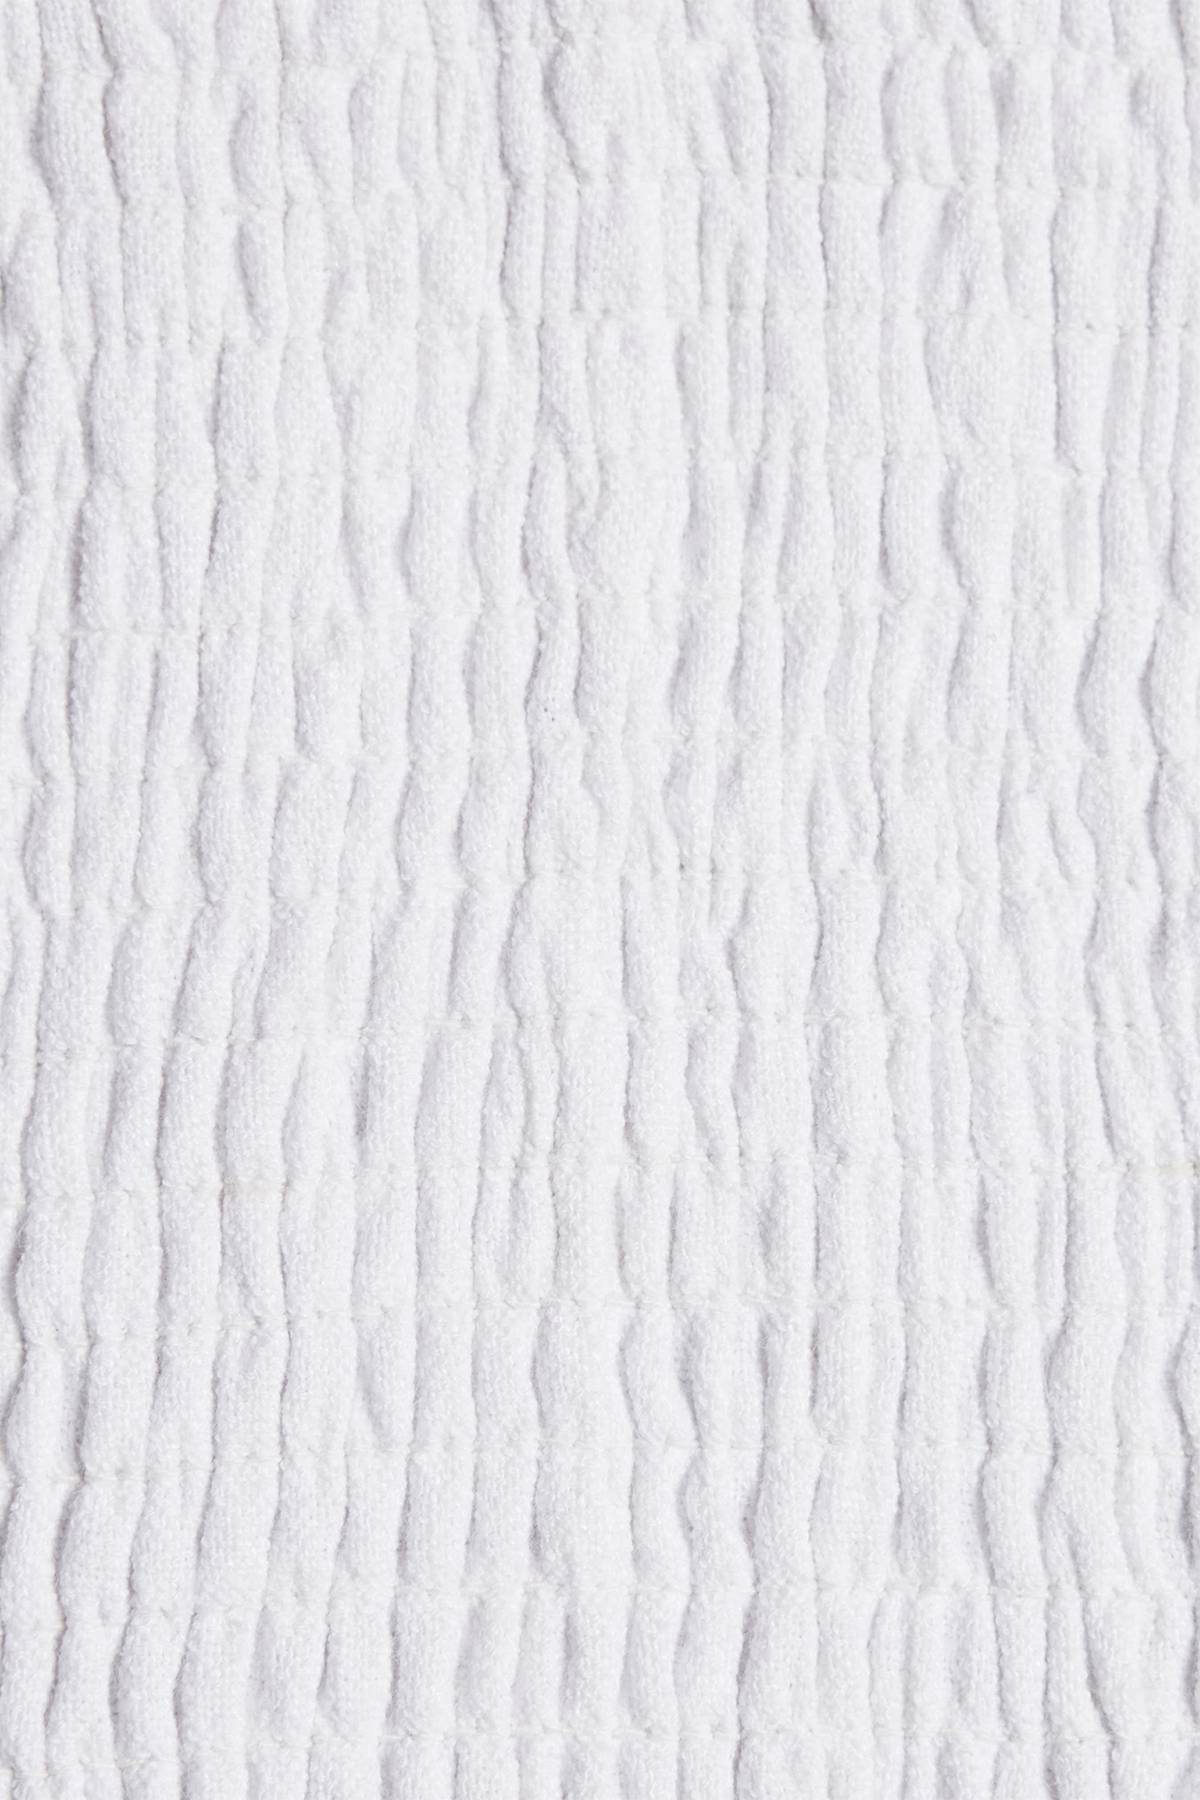 Sirena Sarong in White Crinkle Linen